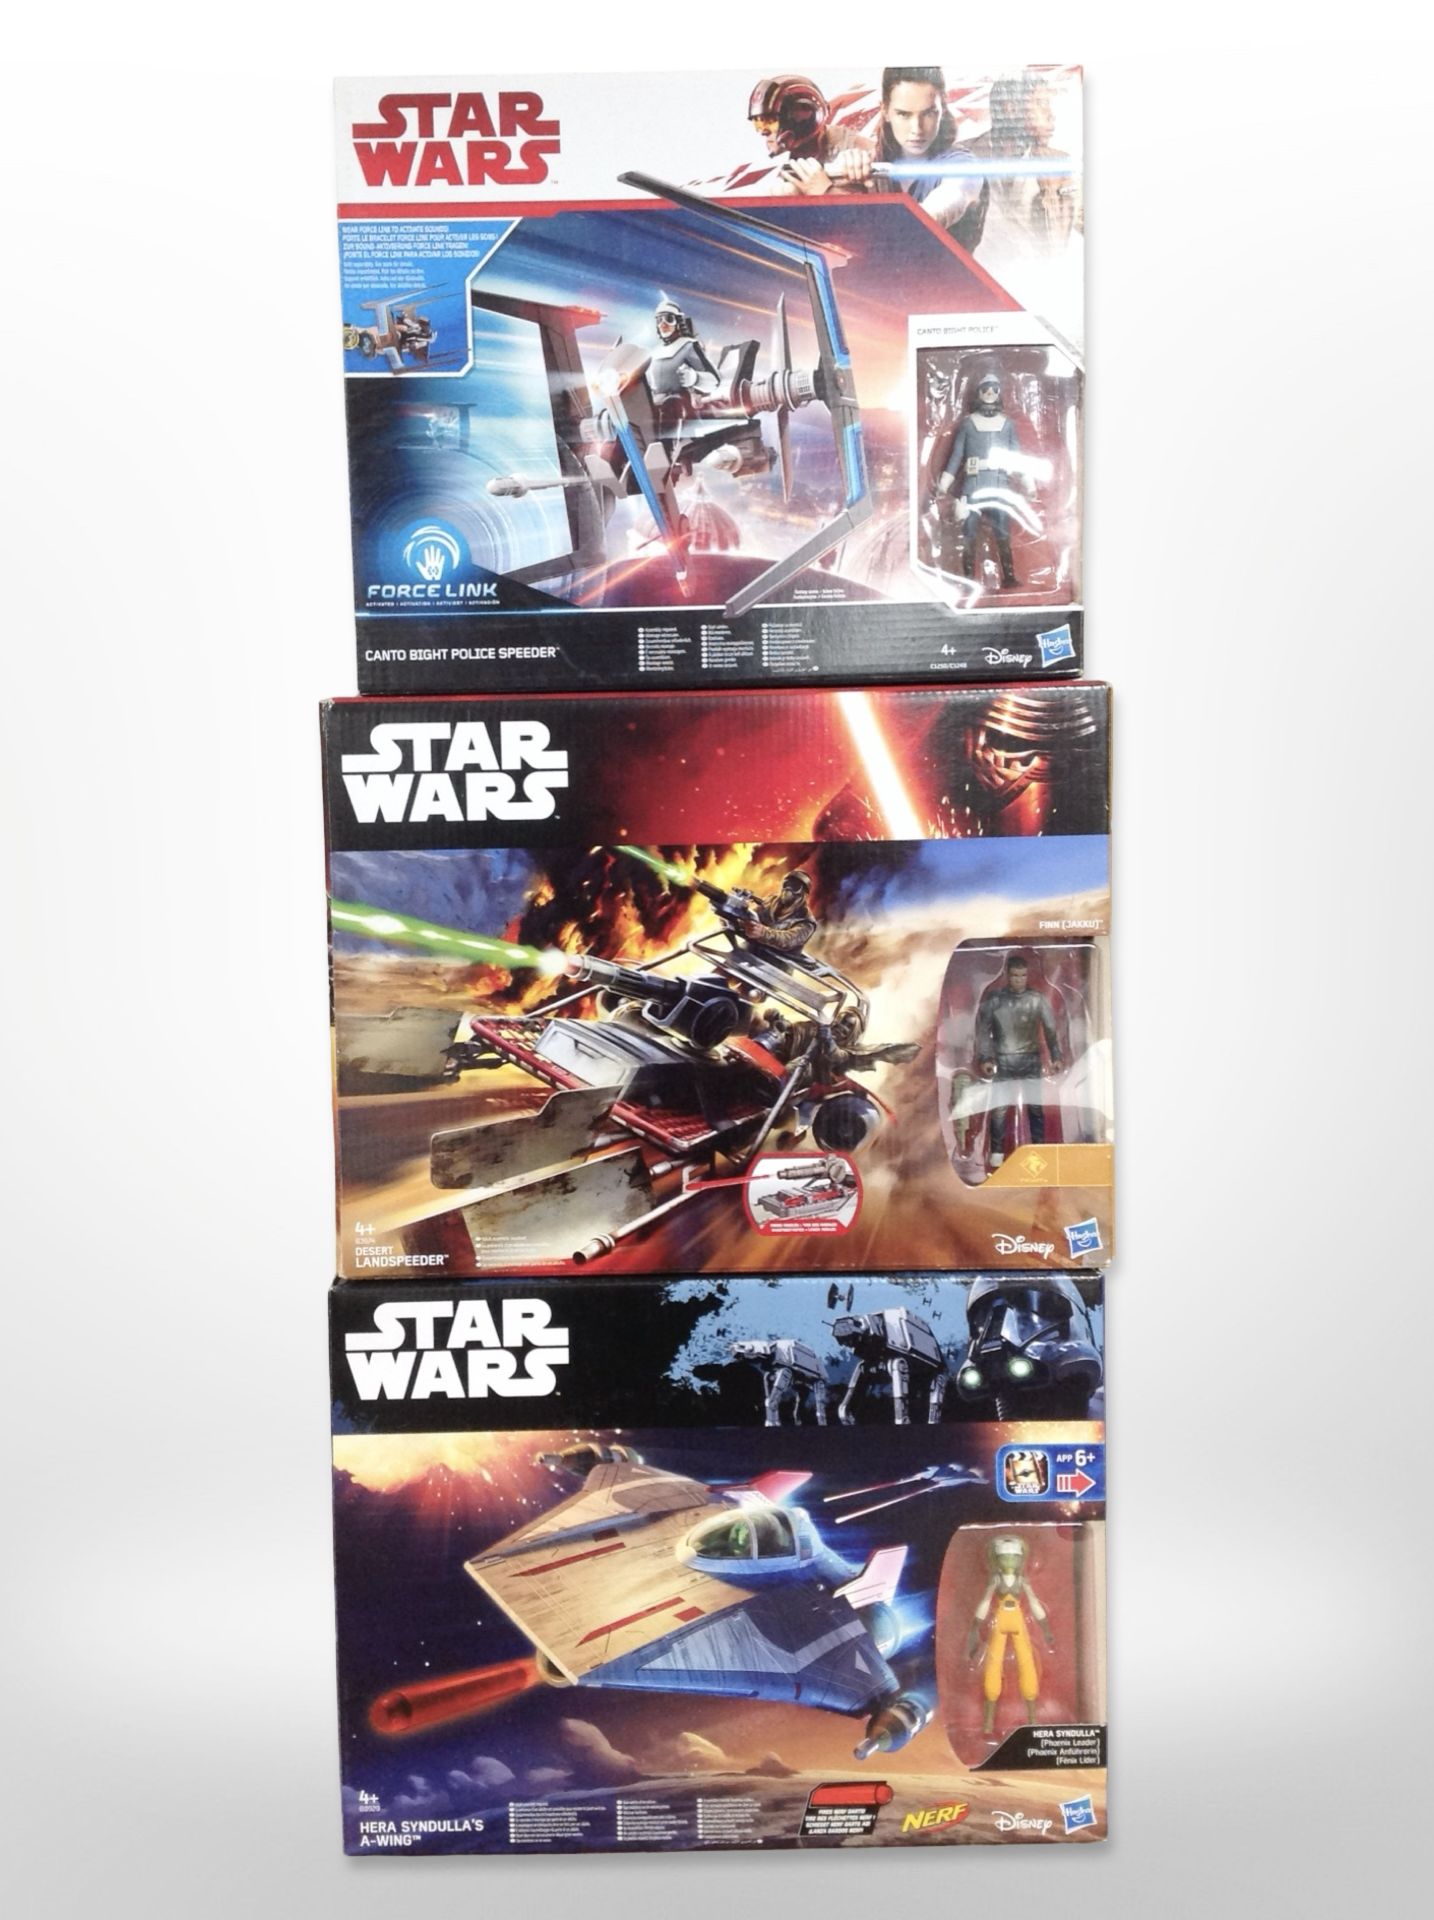 Three Hasbro Disney Star Wars models, Canto Bight Police Speeder, Desert Landspeeder,